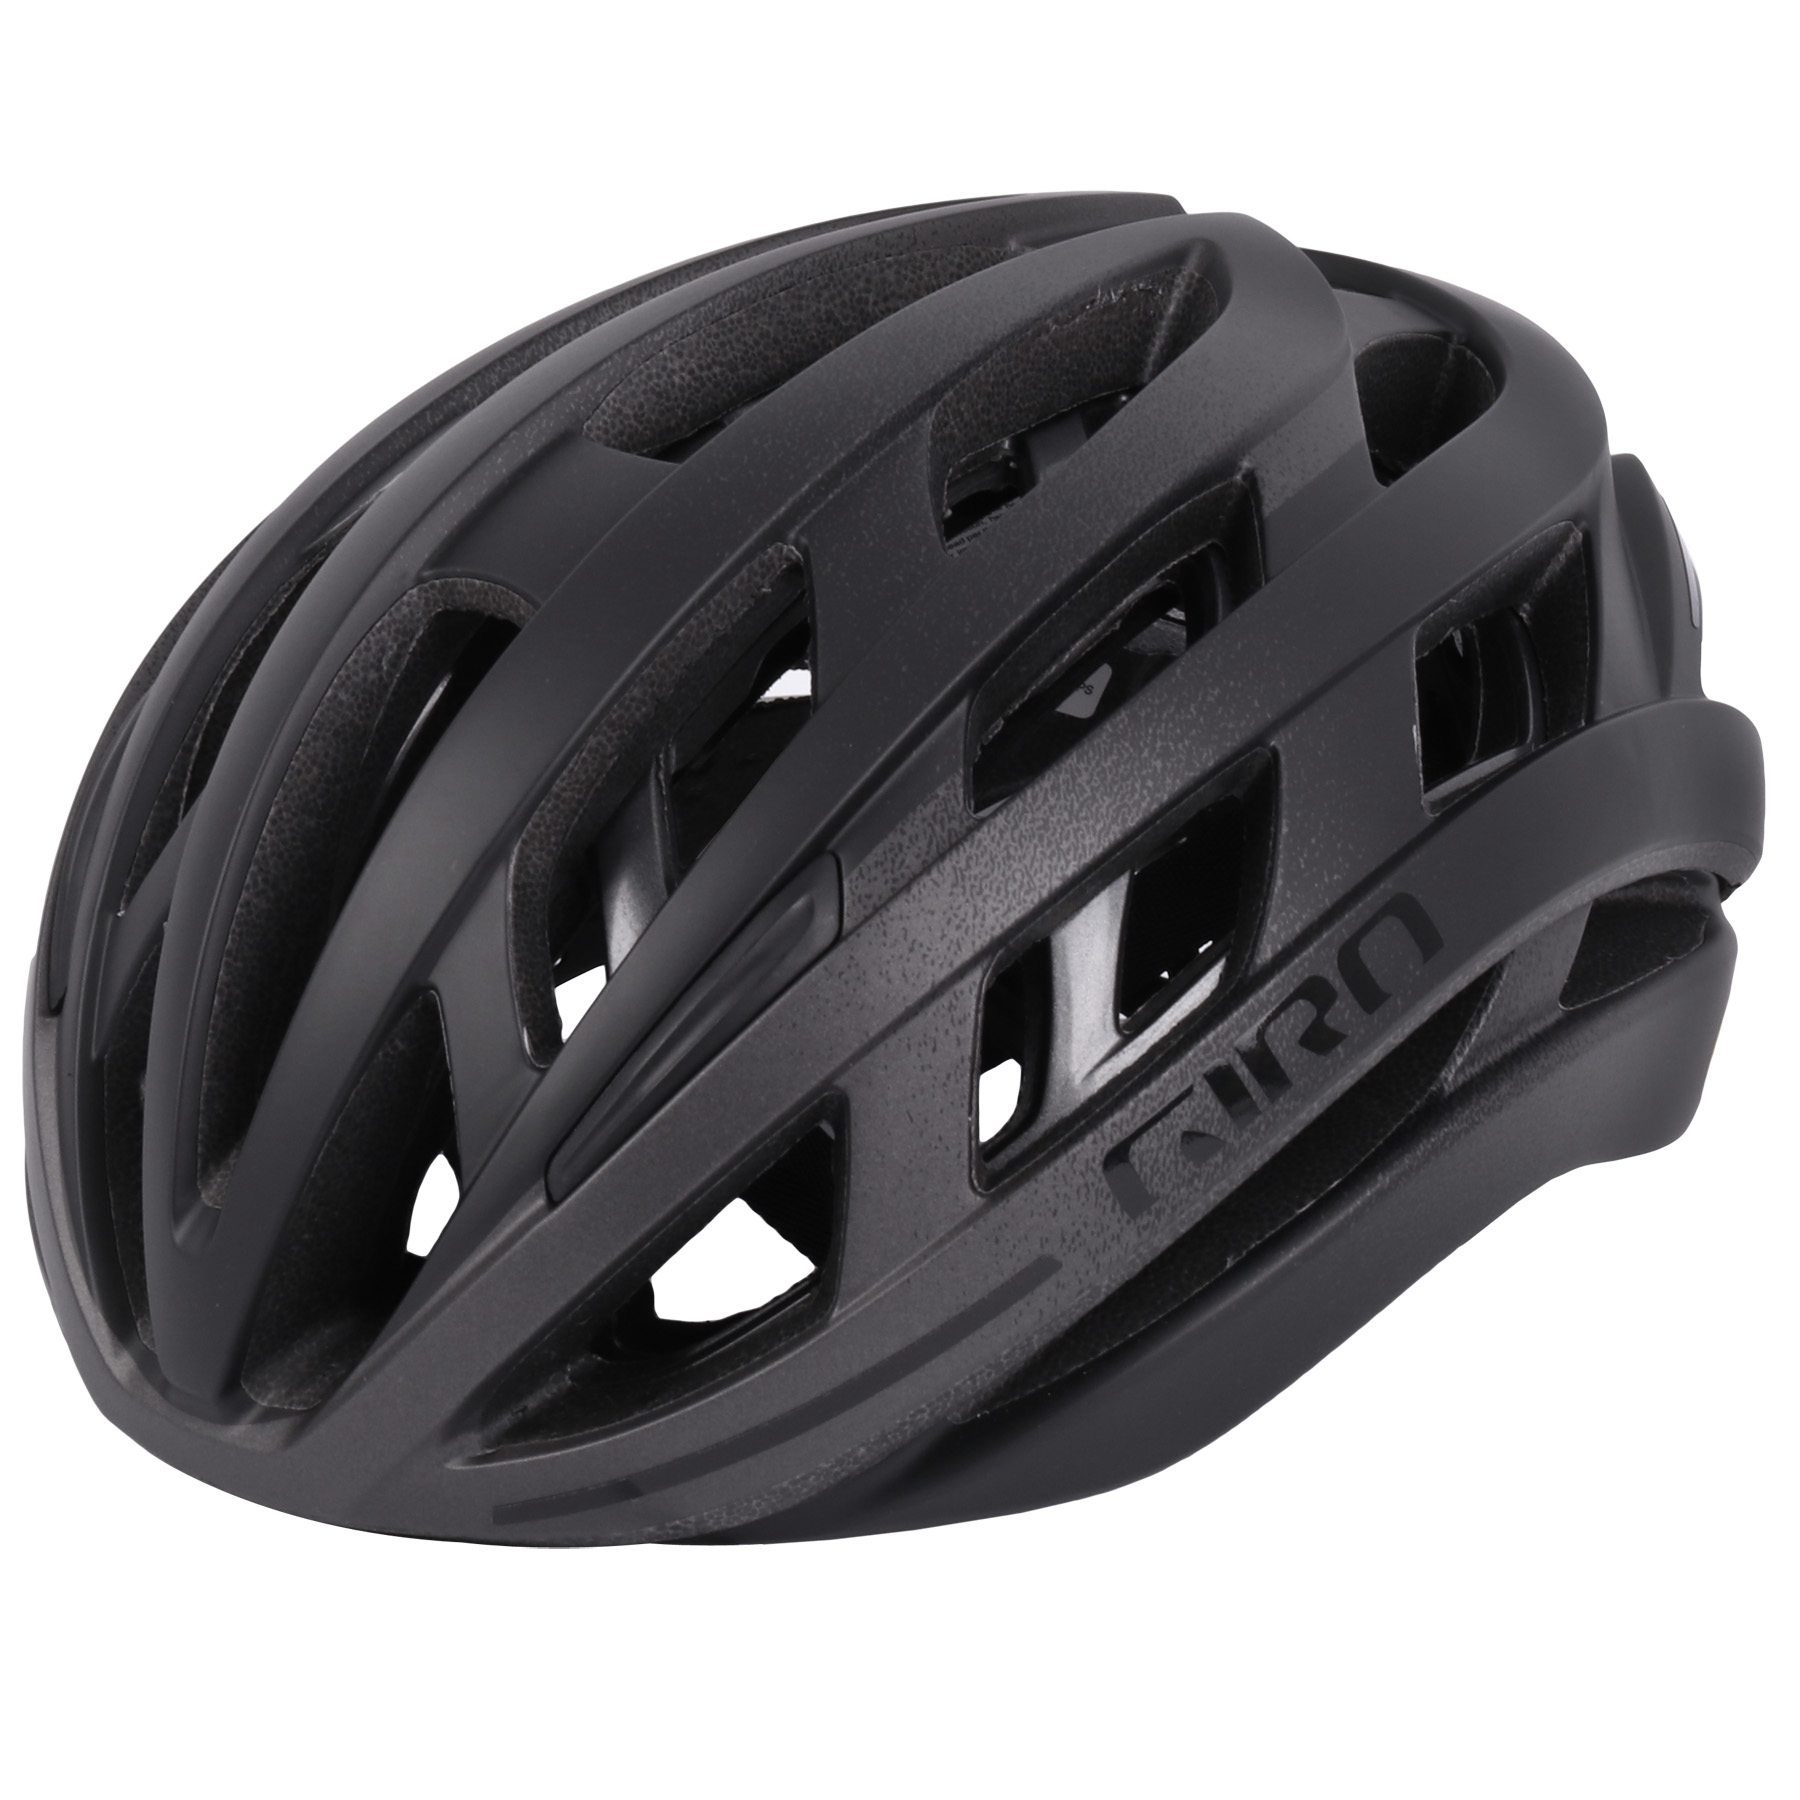 Productfoto van Giro Helios Spherical MIPS Helmet - matte black fade